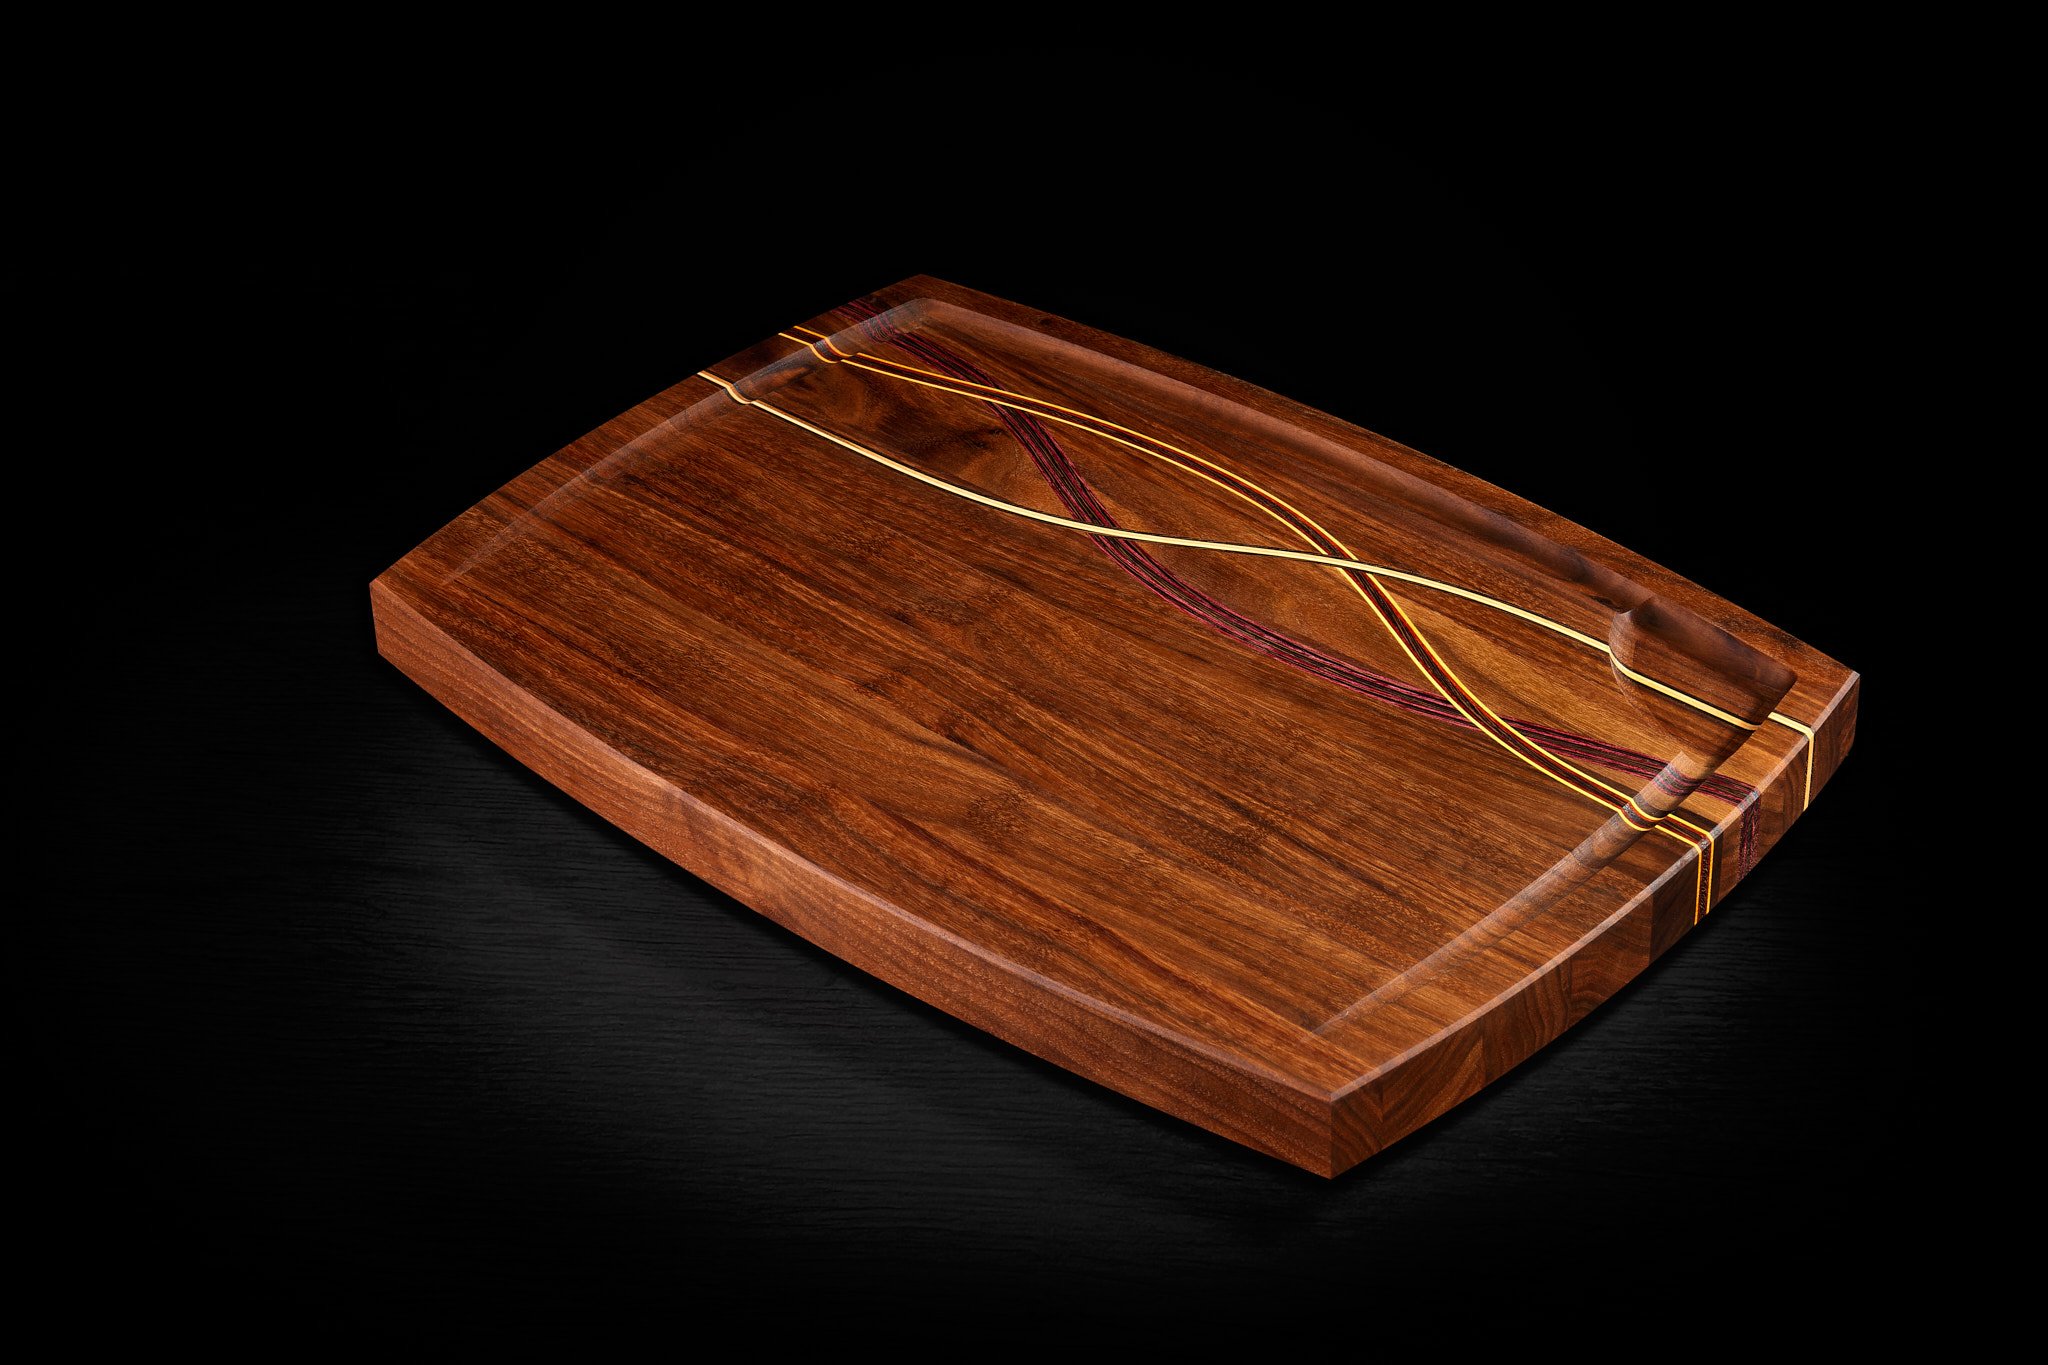 Walnut cutting boards with curved inlays - Terrestra